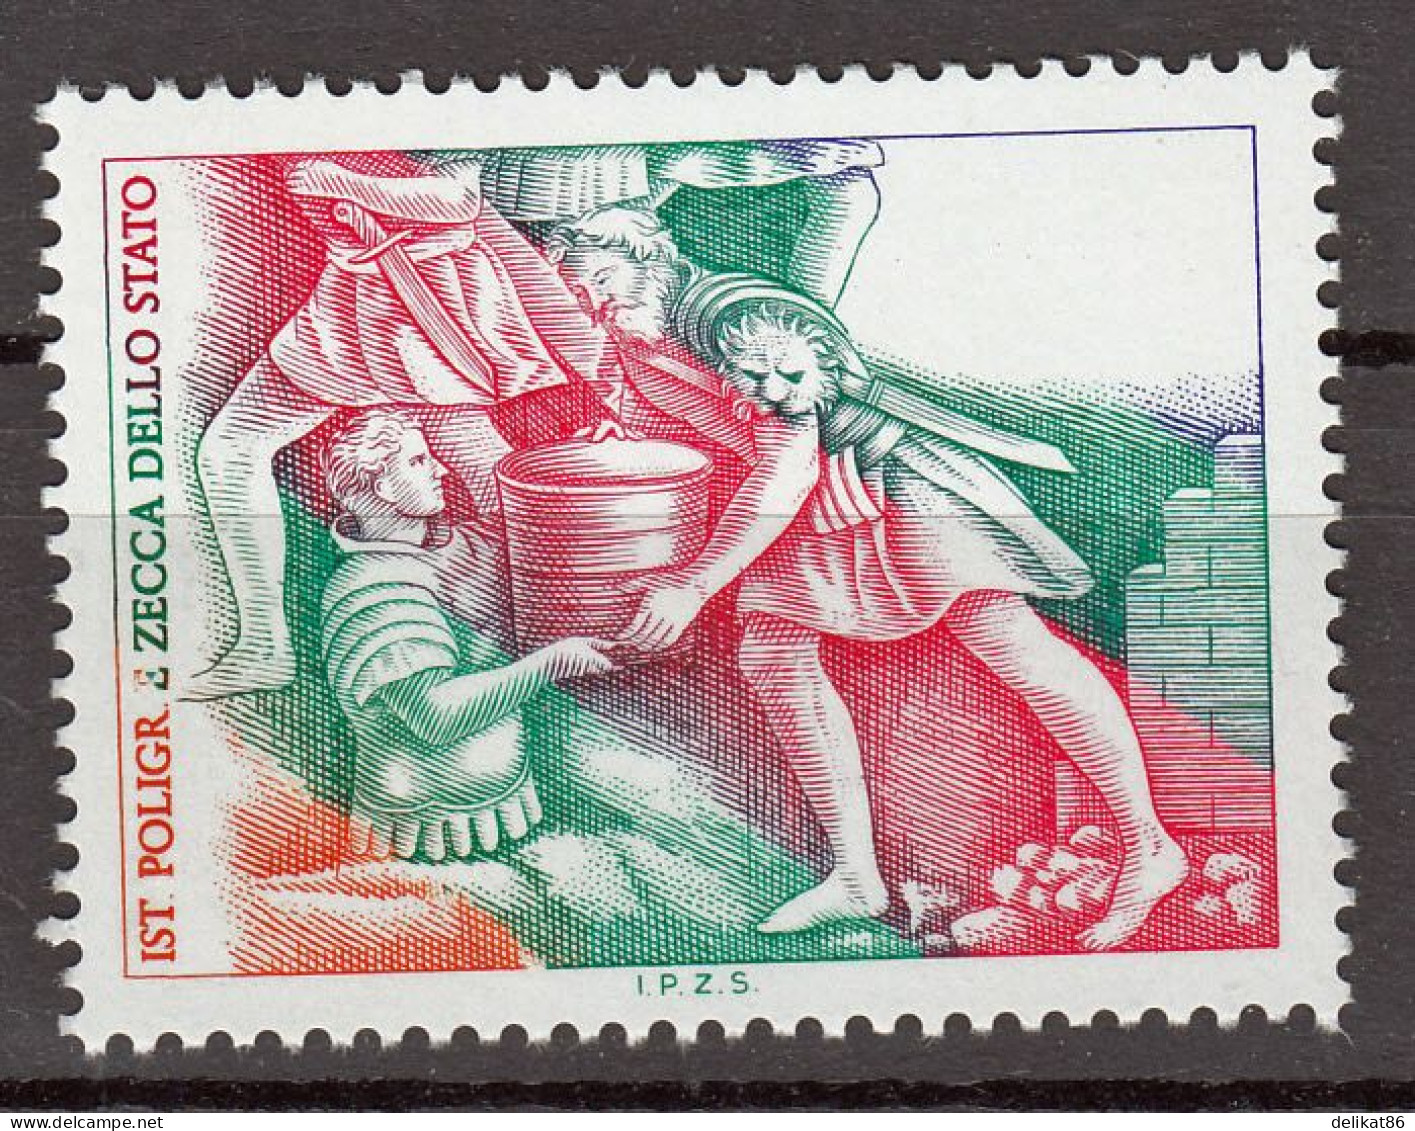 Probedruck Test Stamp Specimen Prove Istituto Poligrafico dello Stato 2003